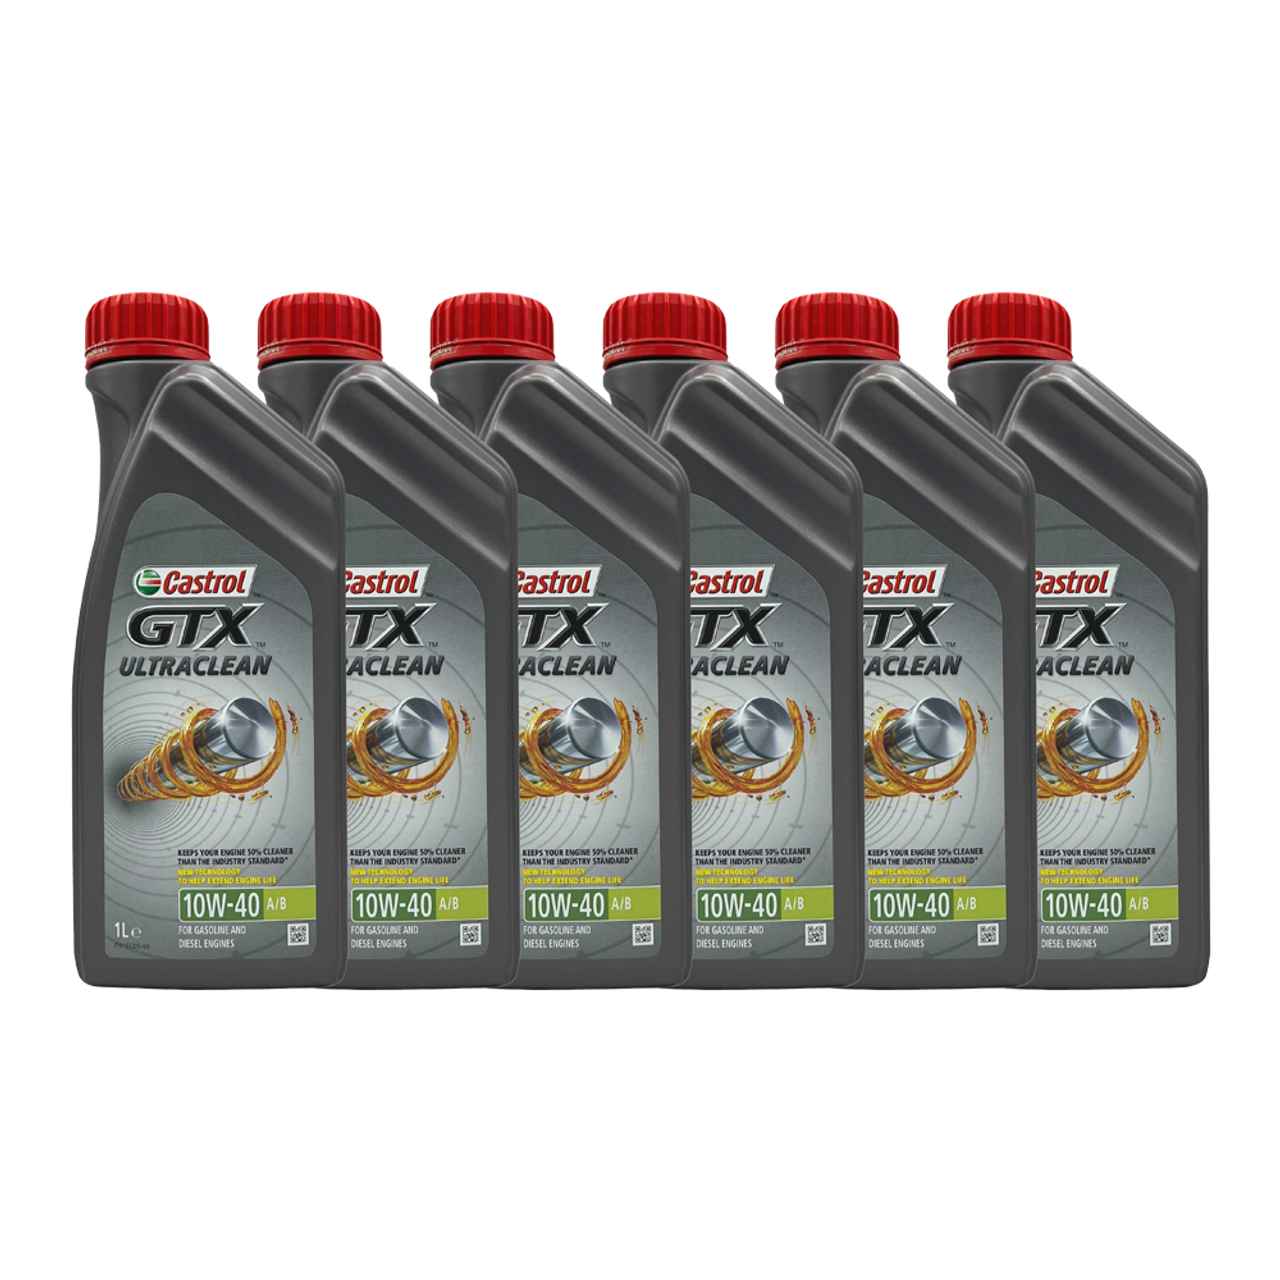 Castrol GTX Ultraclean 10W-40 A/B 6x1 Liter